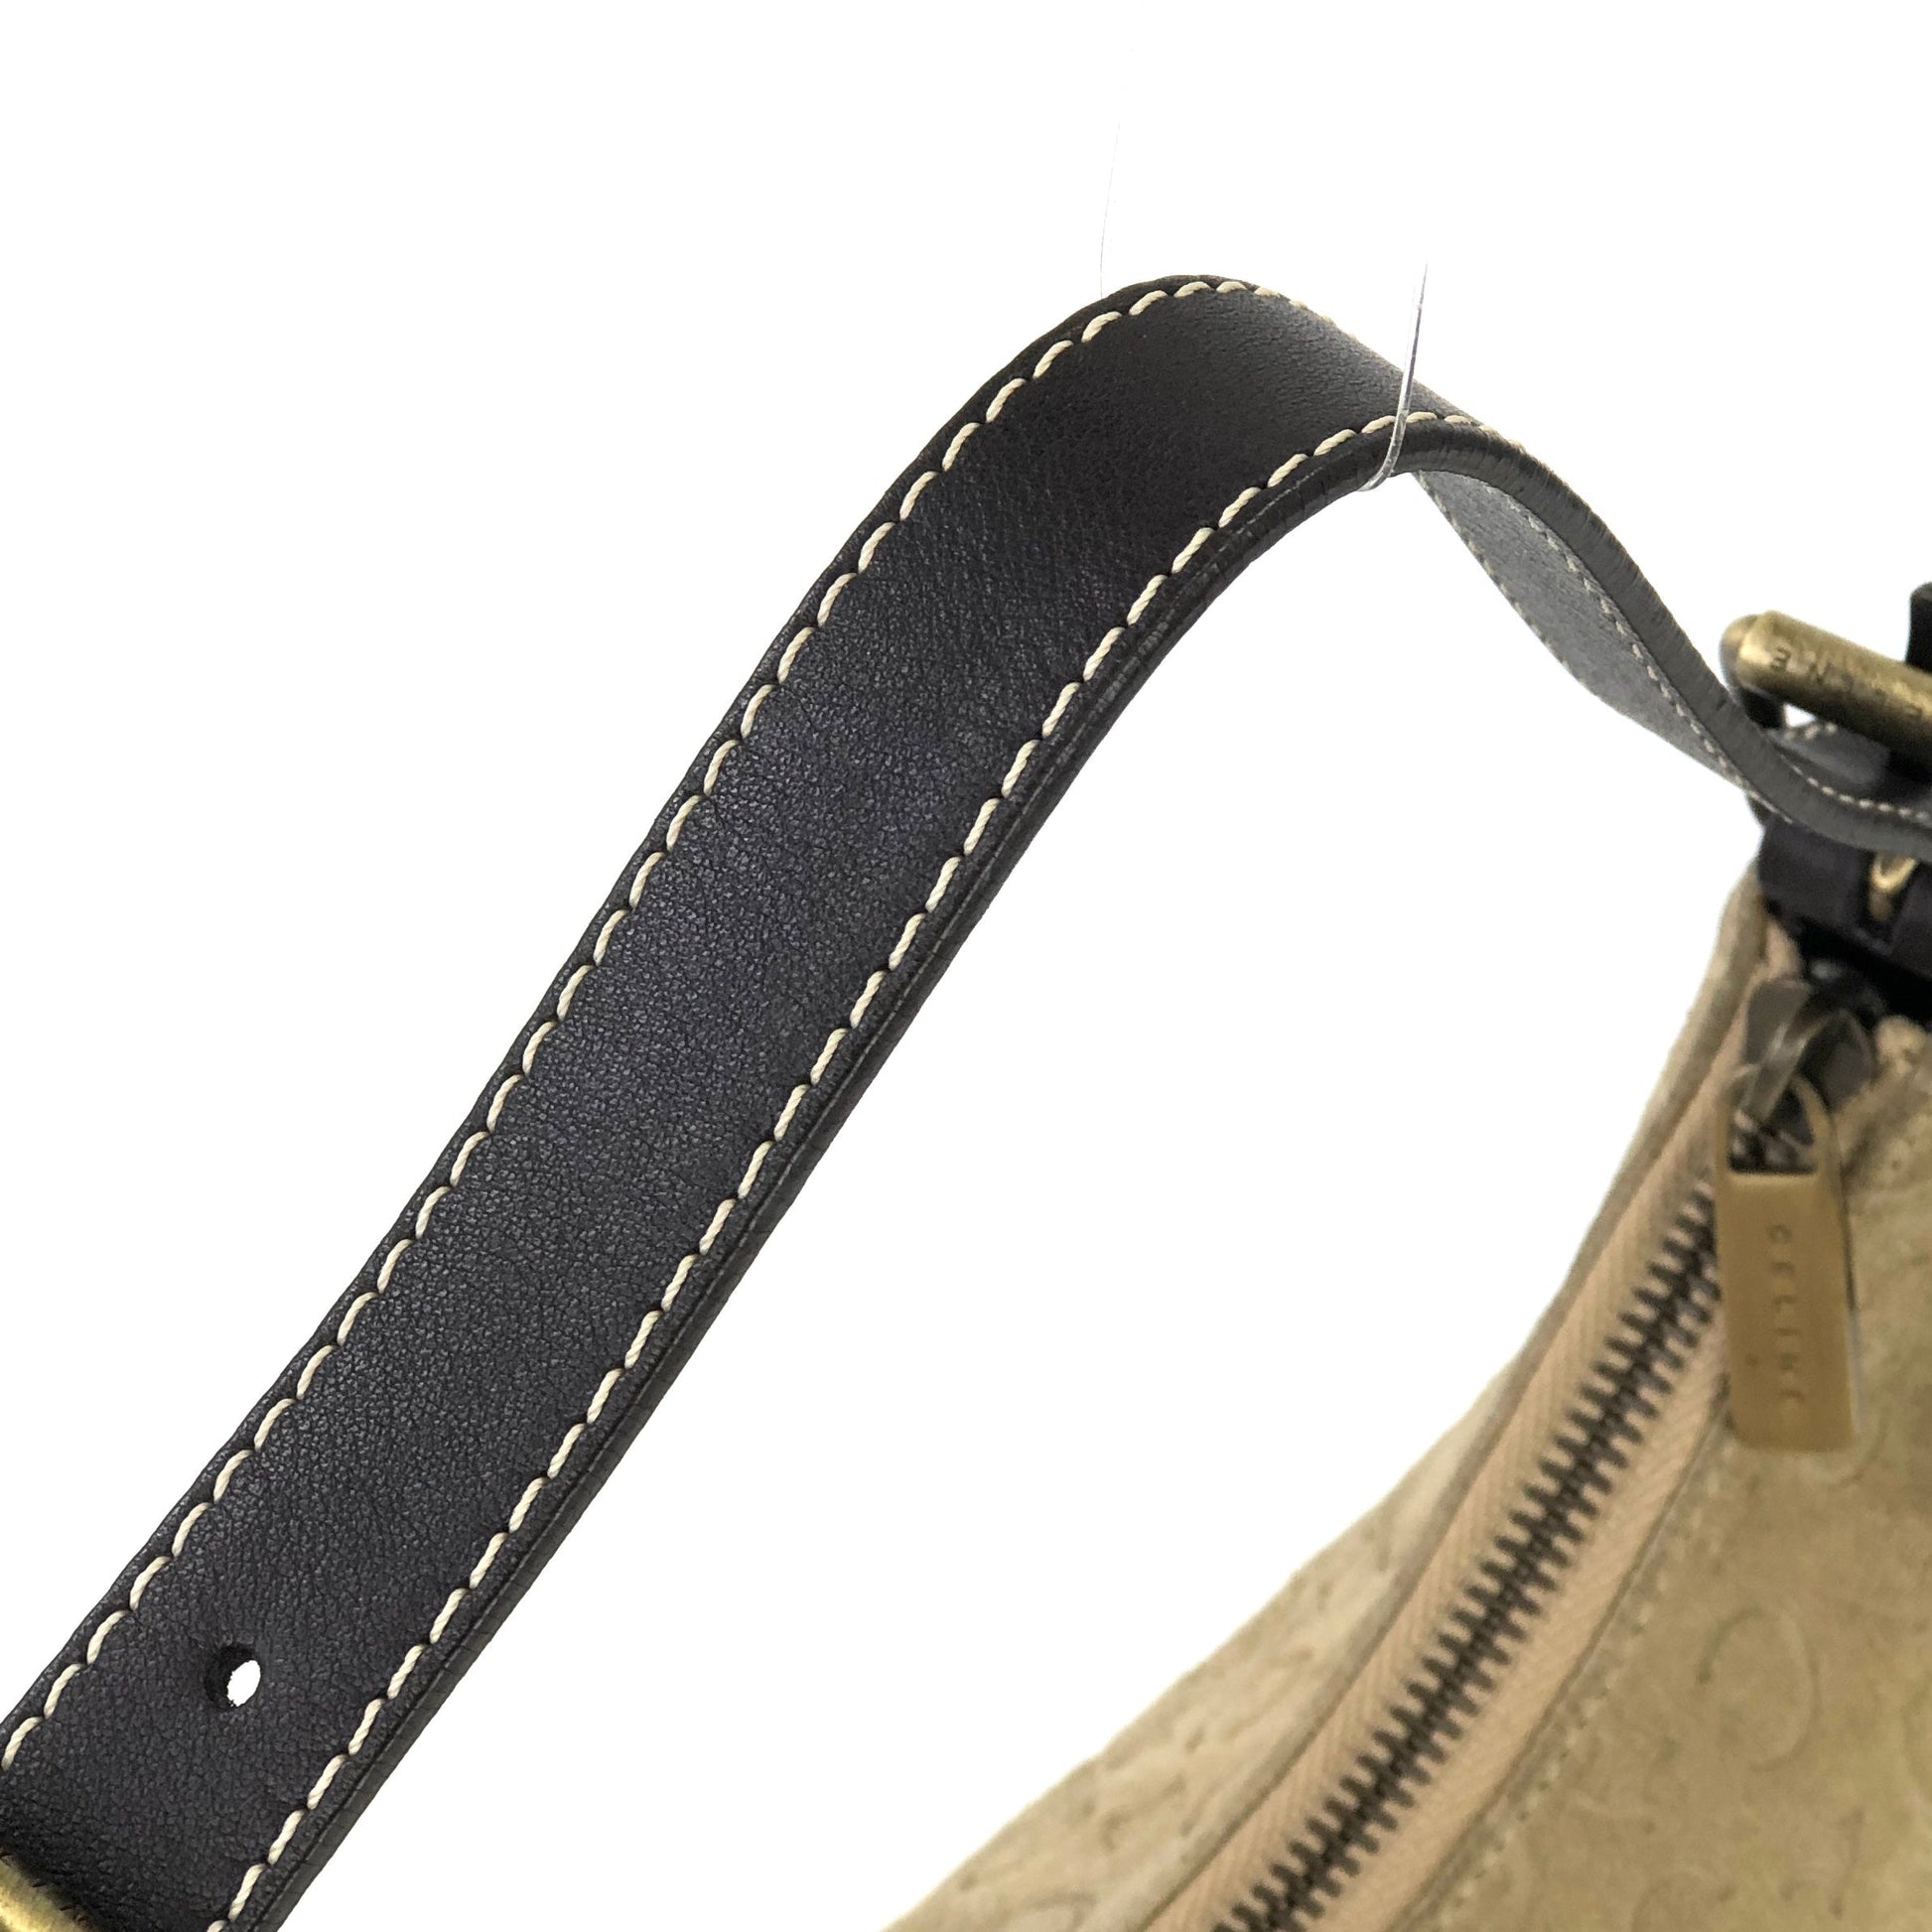 Fendi - Taupe Leather & Suede Guitar Strap Flip Bag